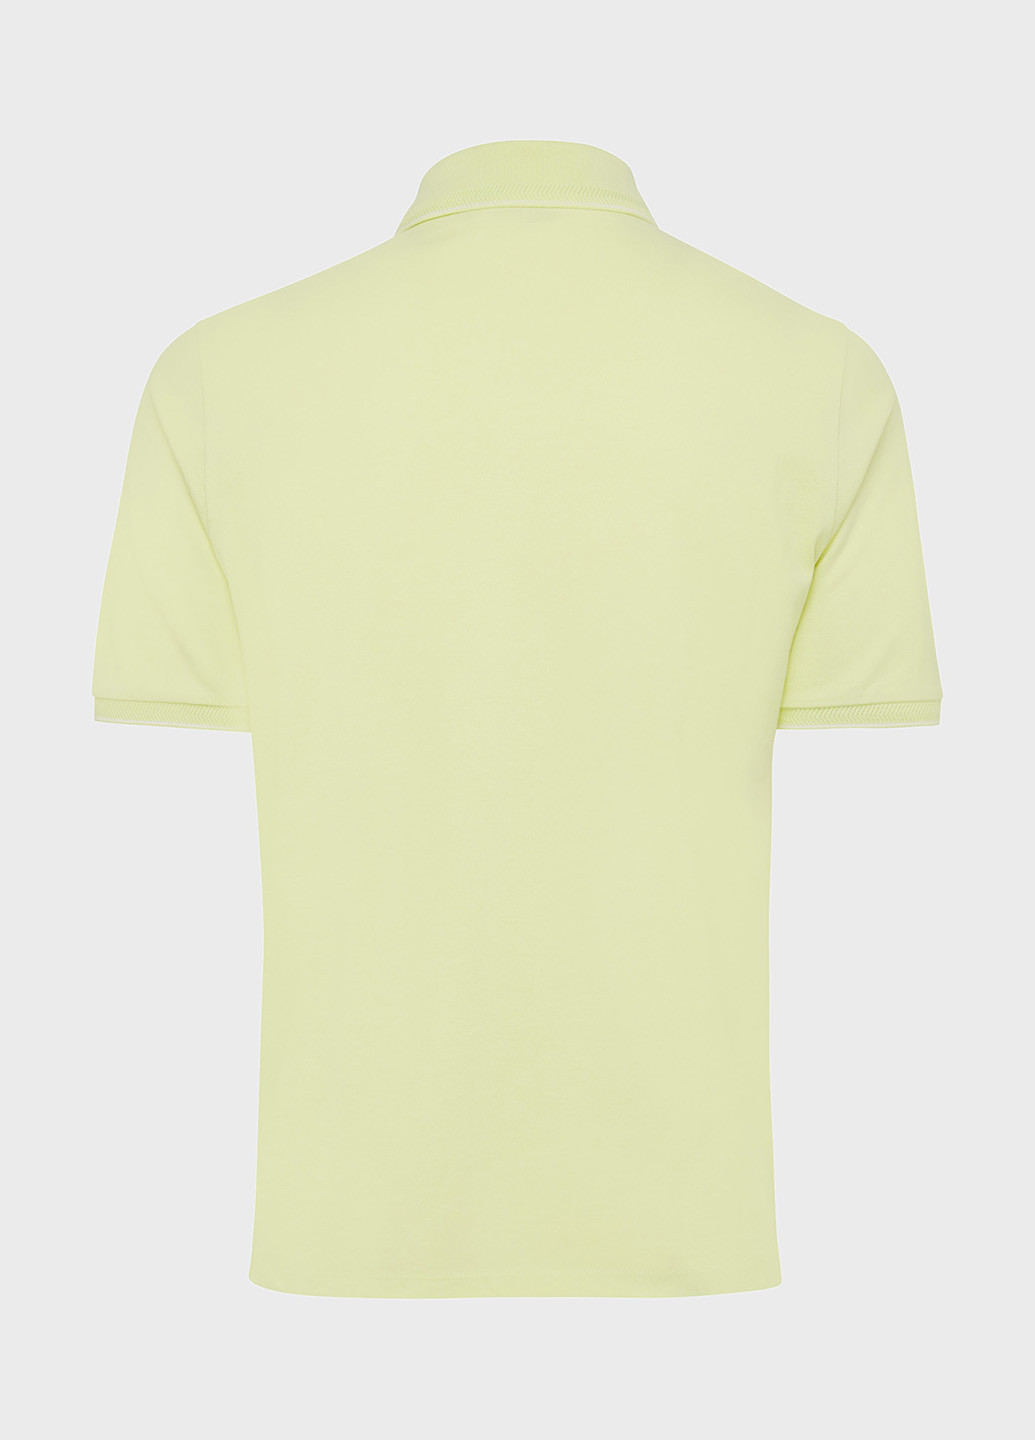 Салатовая футболка-поло для мужчин Mexx однотонная